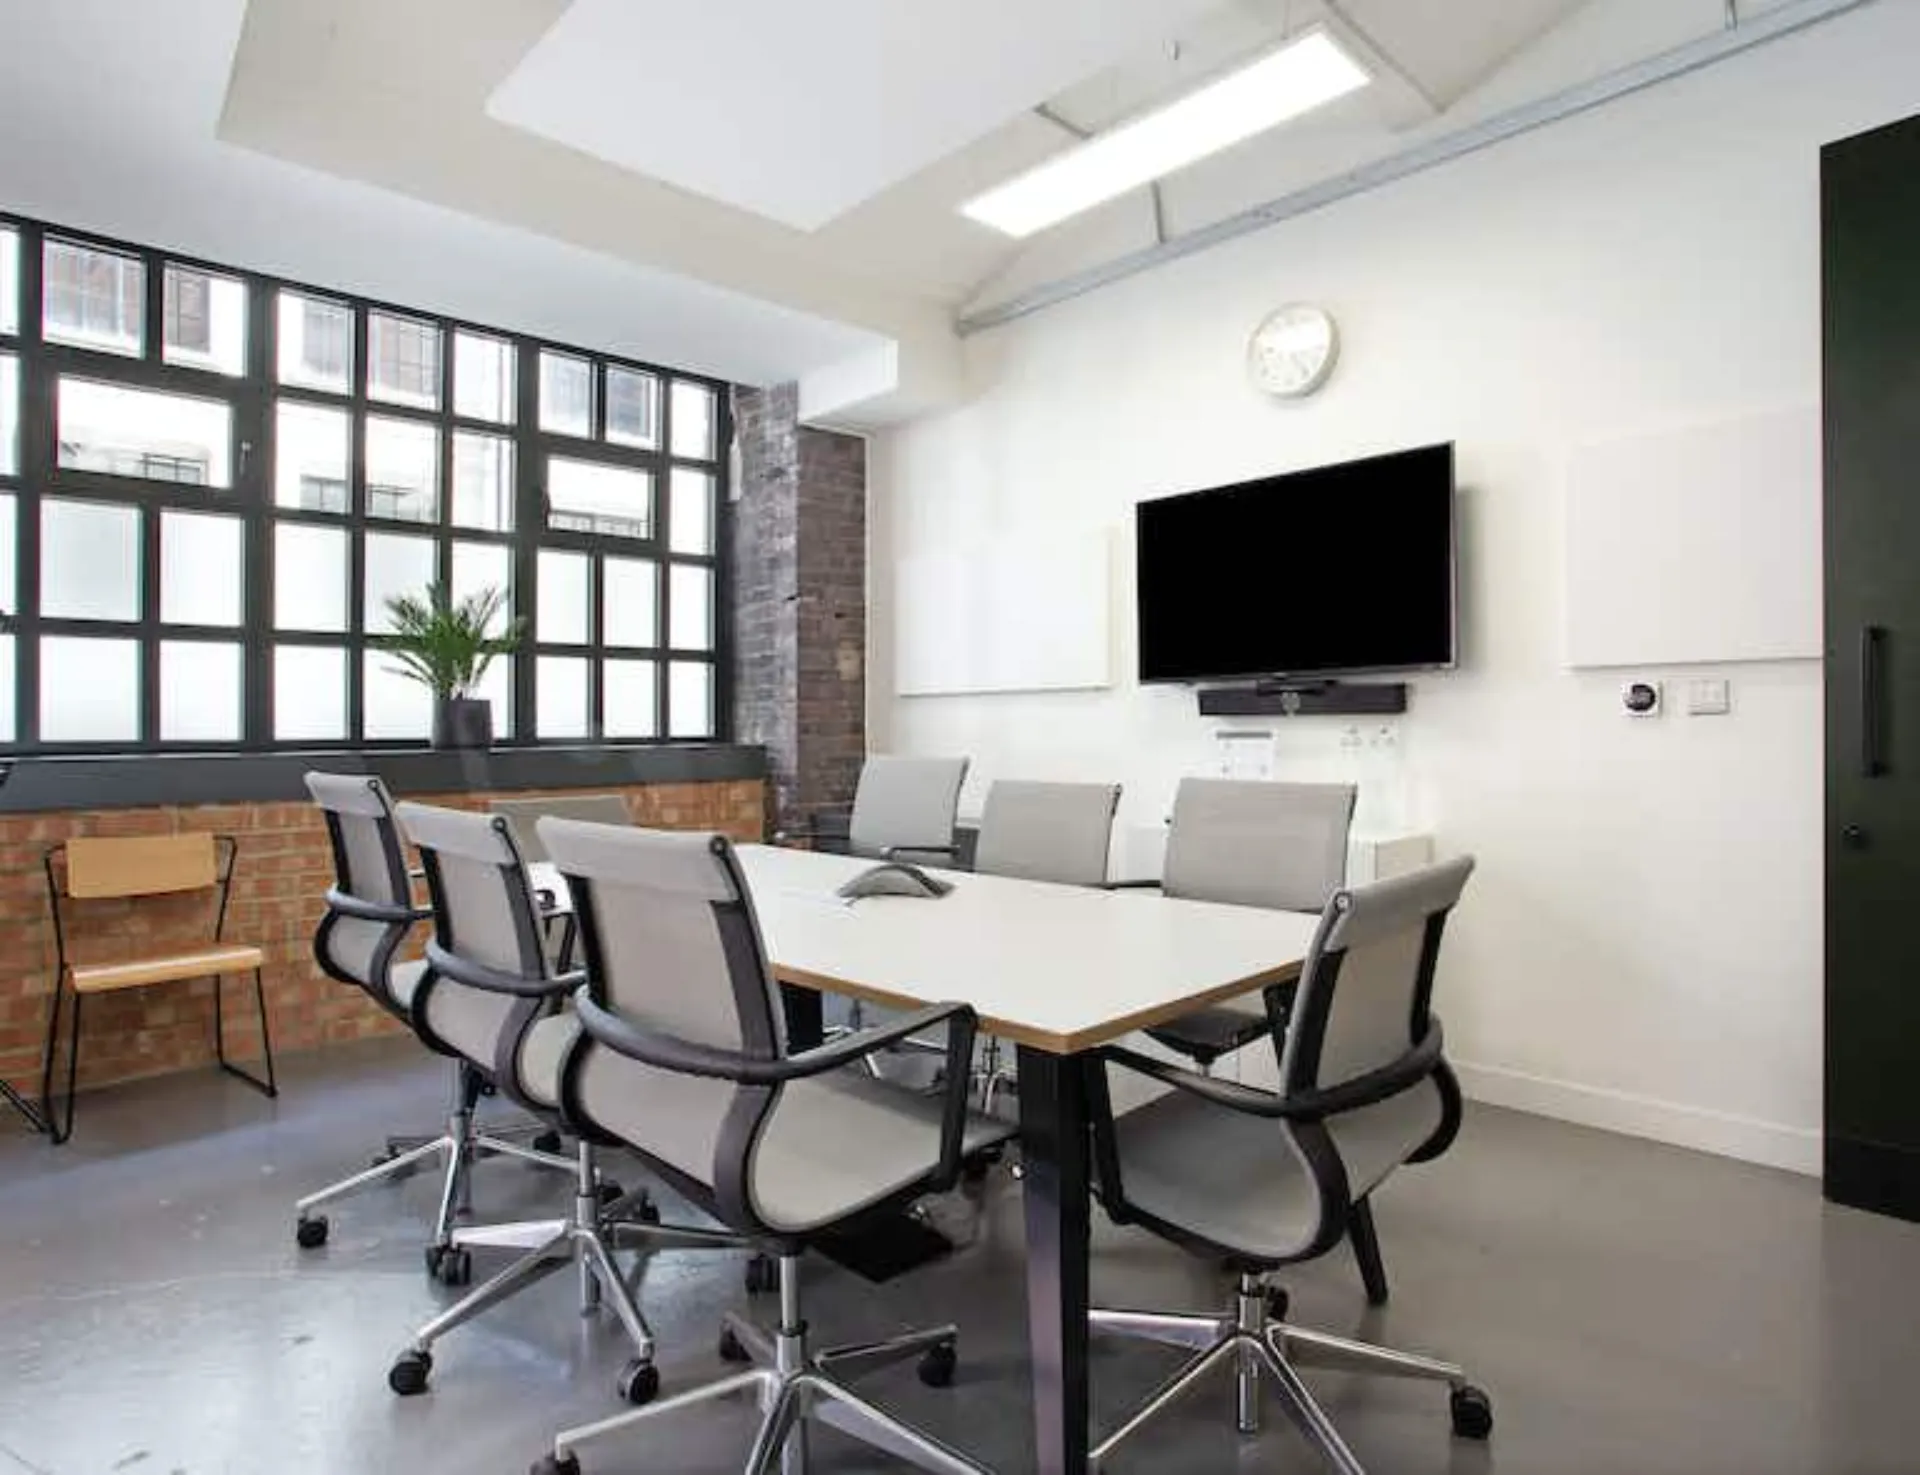 Knowlemore meeting room venue hire spacious light boardroom conference room presentations